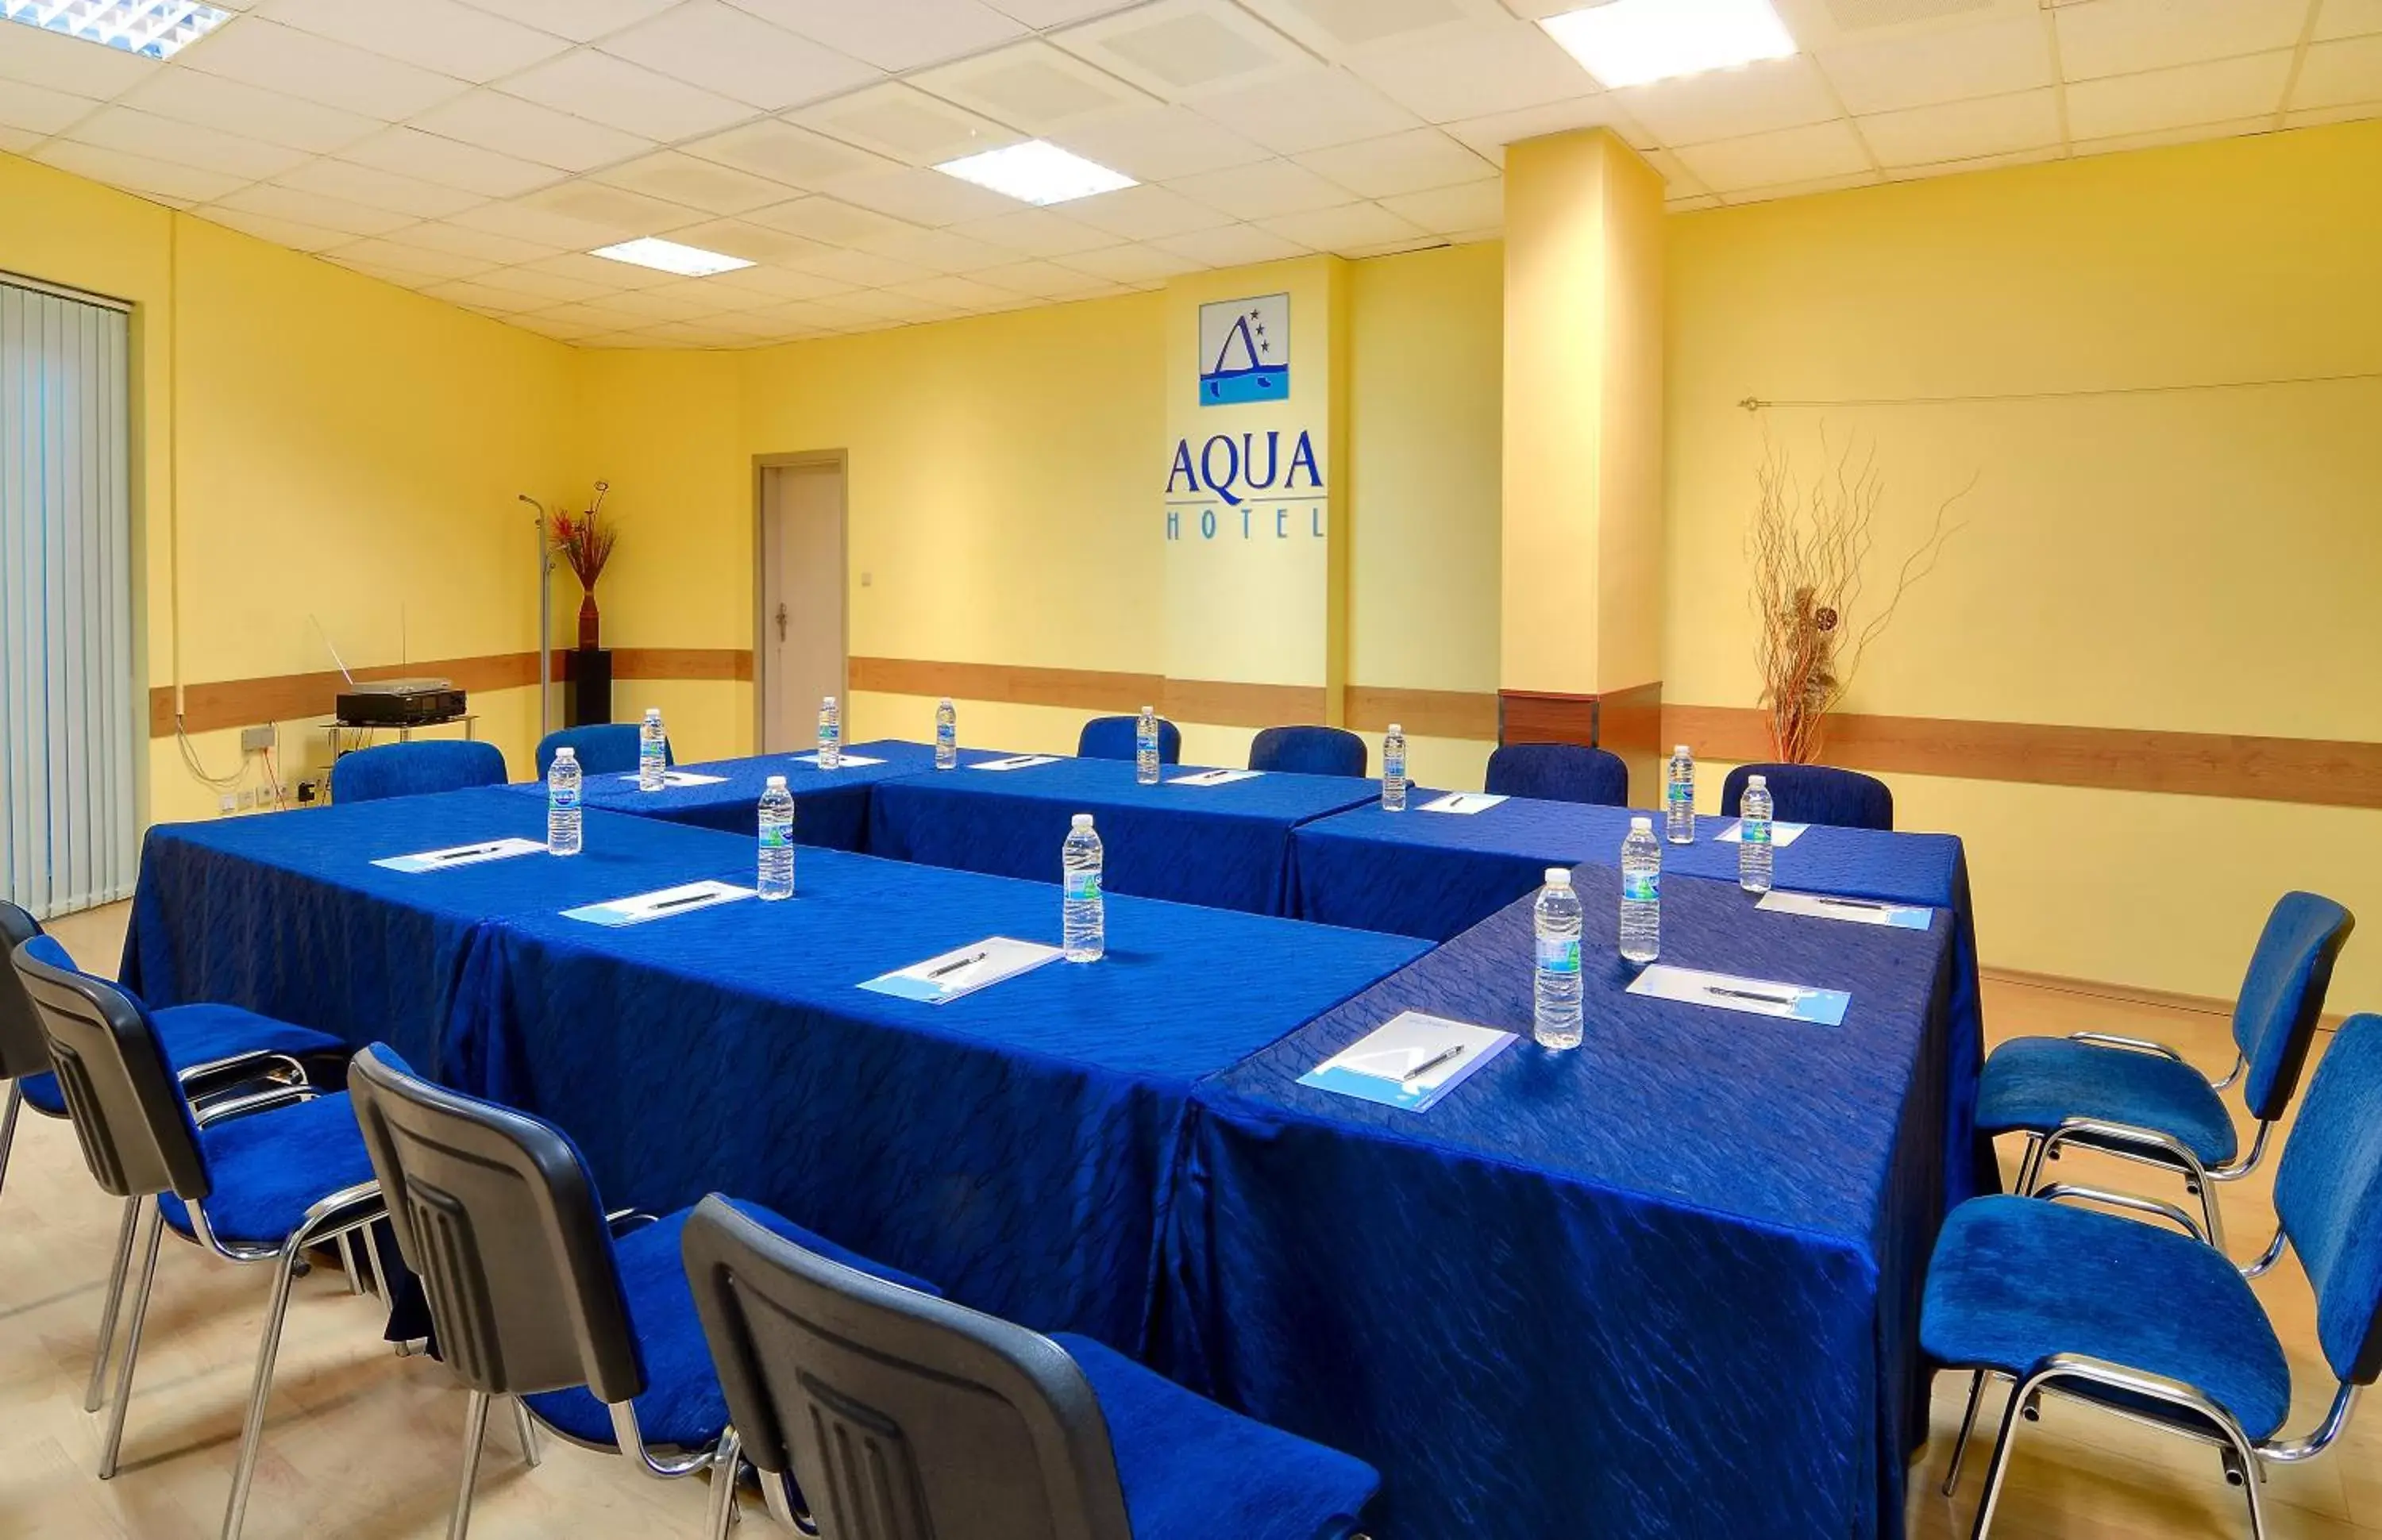 Business facilities in Aqua Hotel